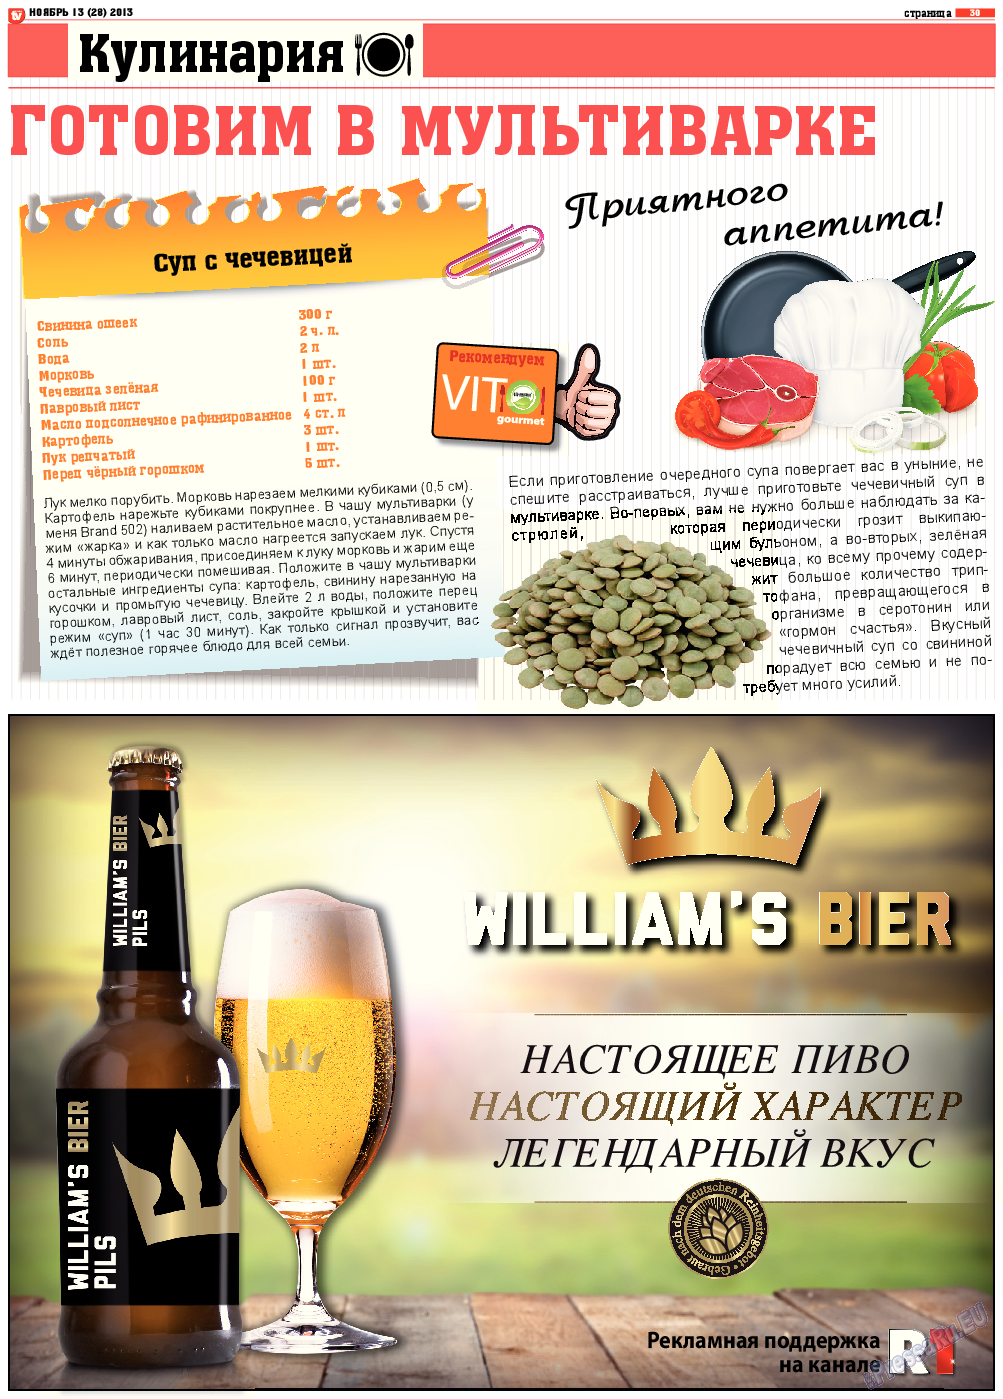 TV-бульвар, газета. 2013 №13 стр.30